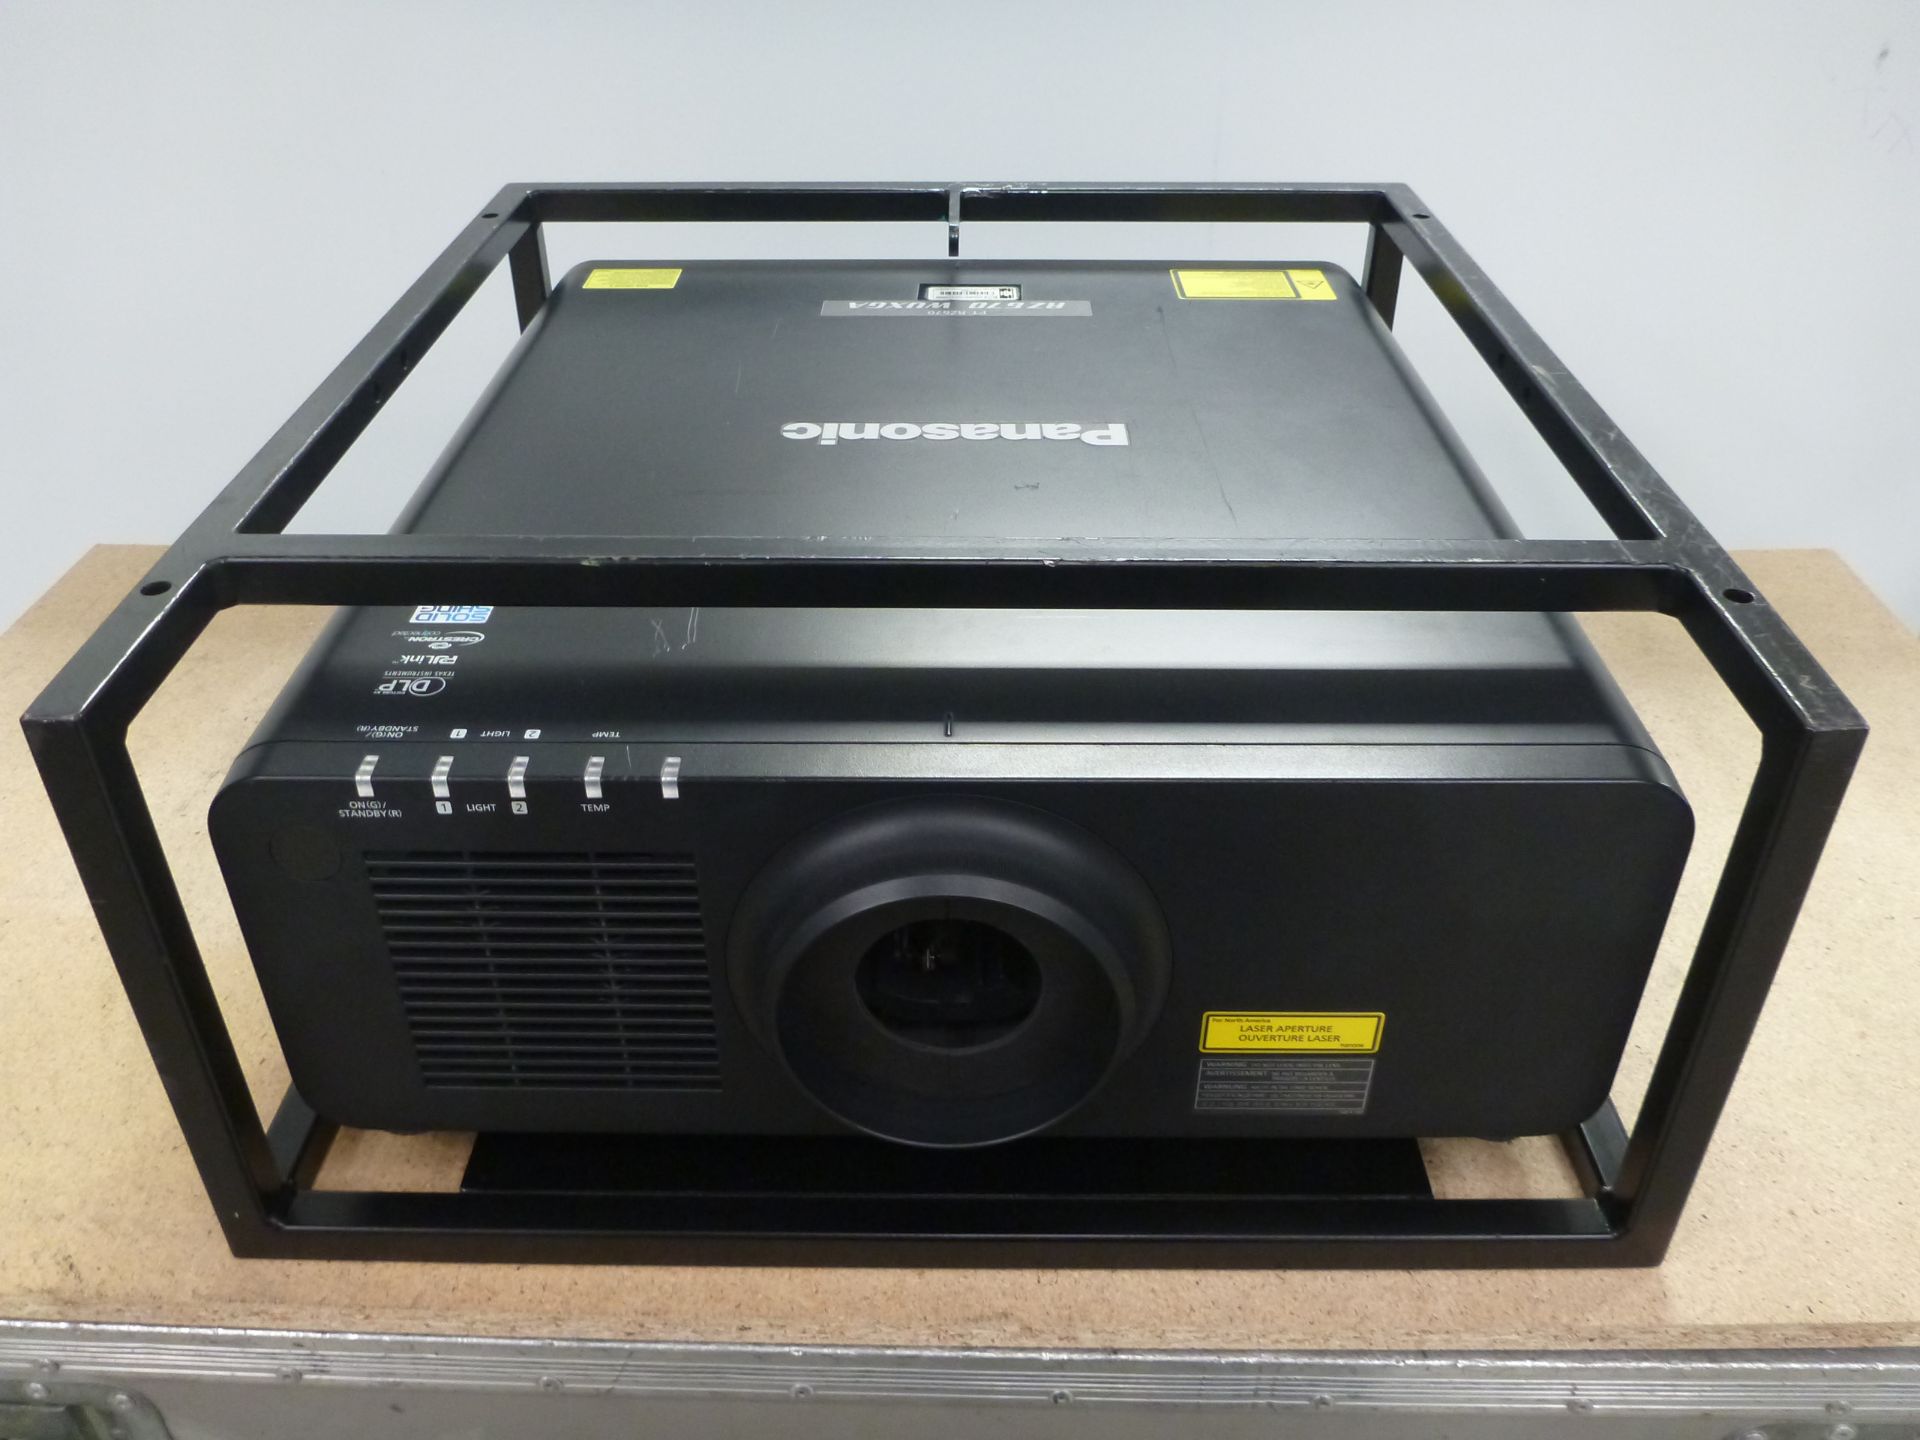 Panasonic Laser Projector, Model PT-RZ670, S/N SH5252006, YOM 2015, In flight case with standard 1.